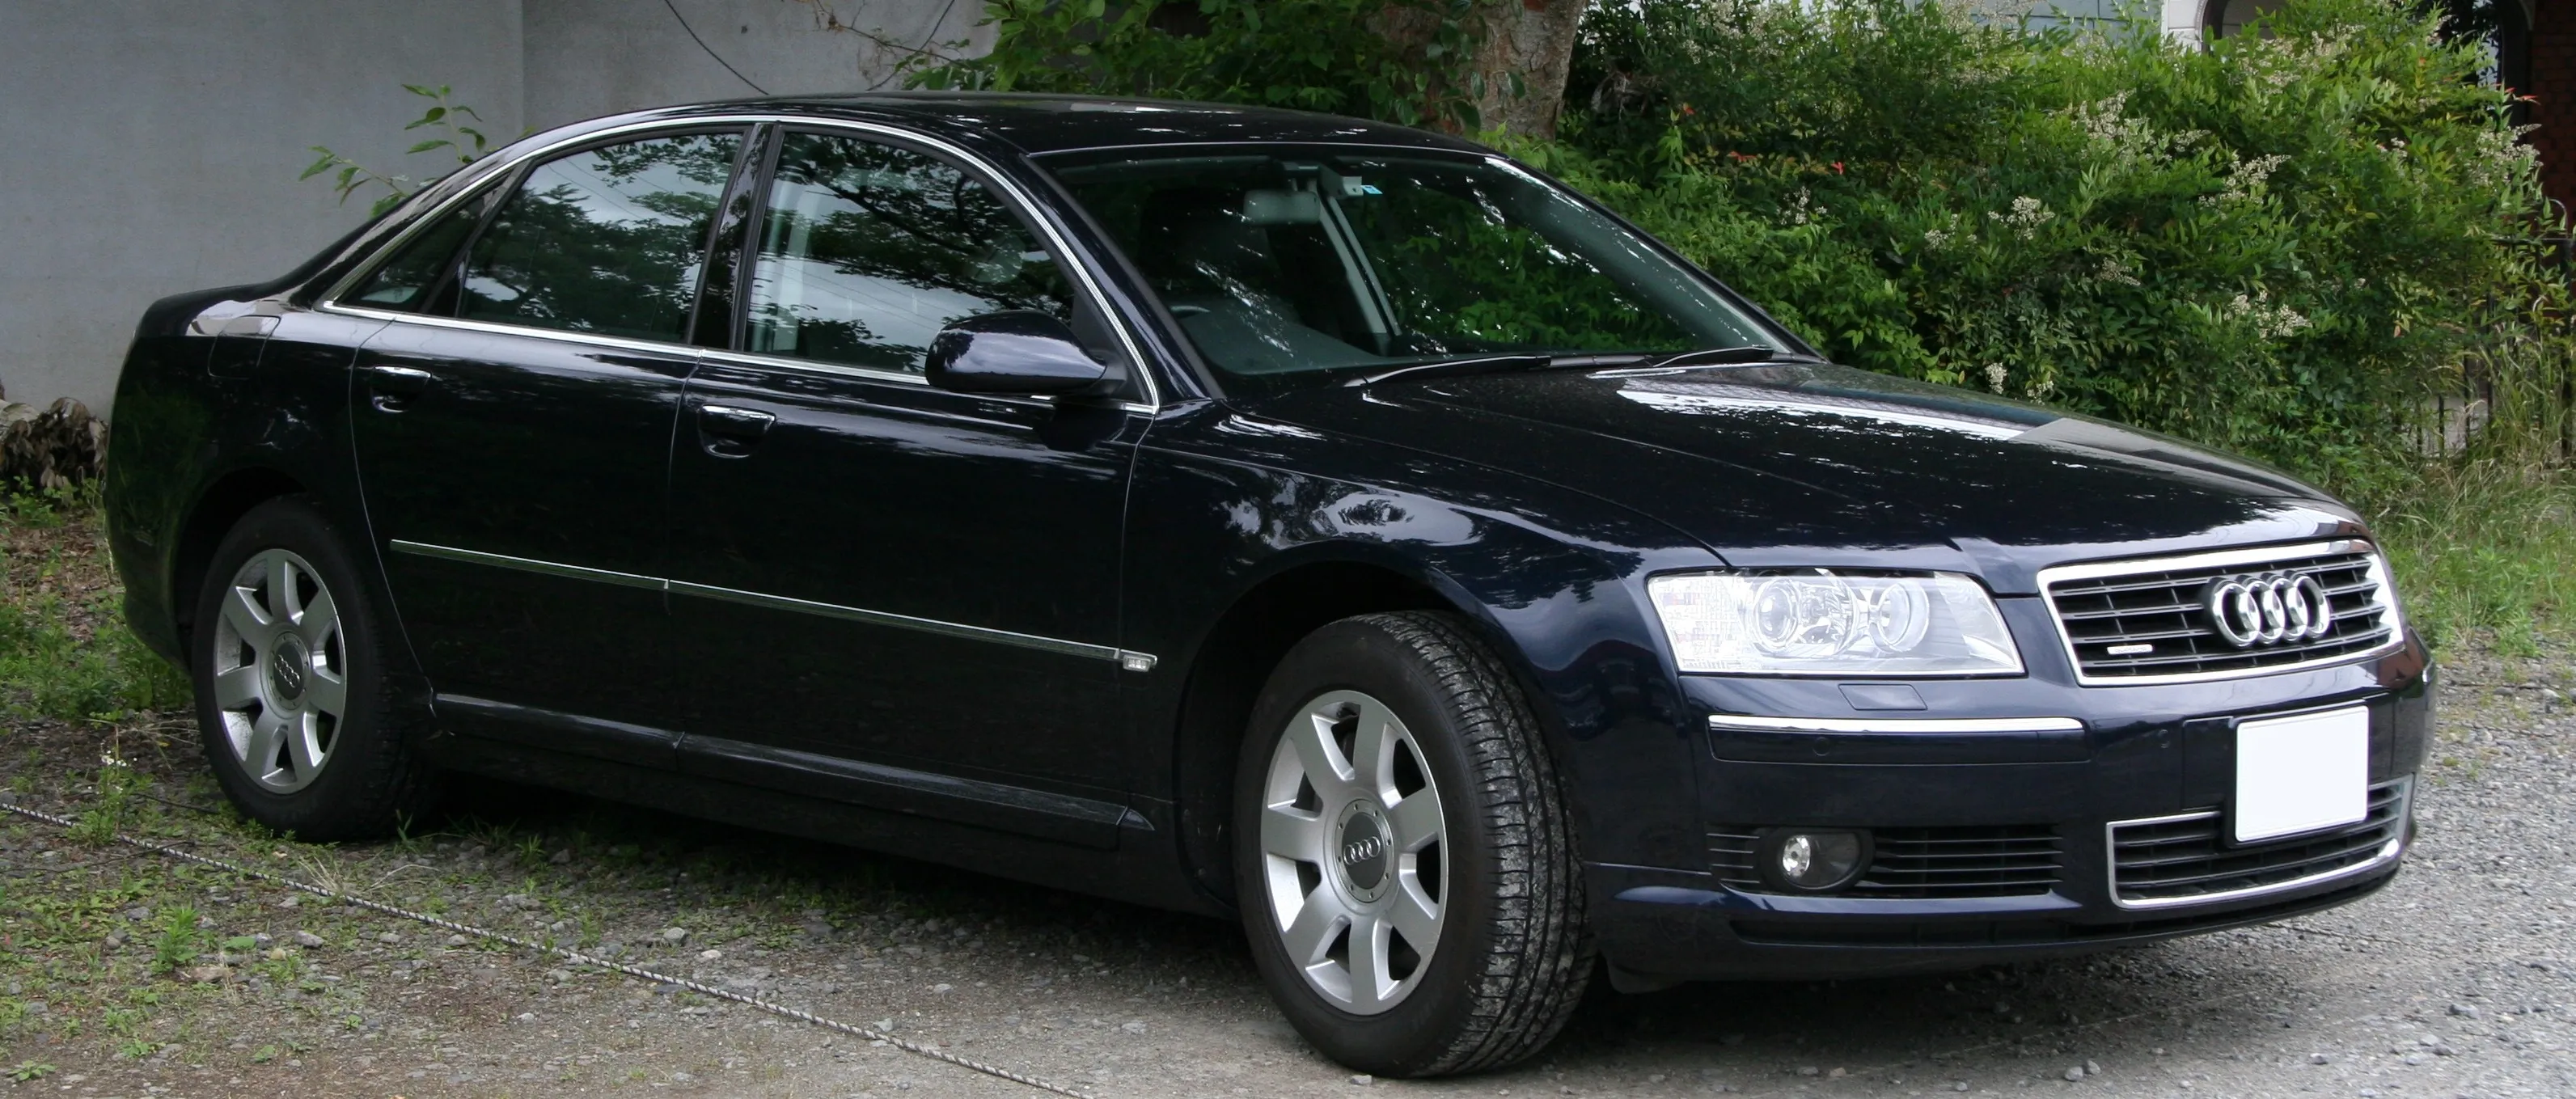 Audi A8 4.2 2005 photo - 10